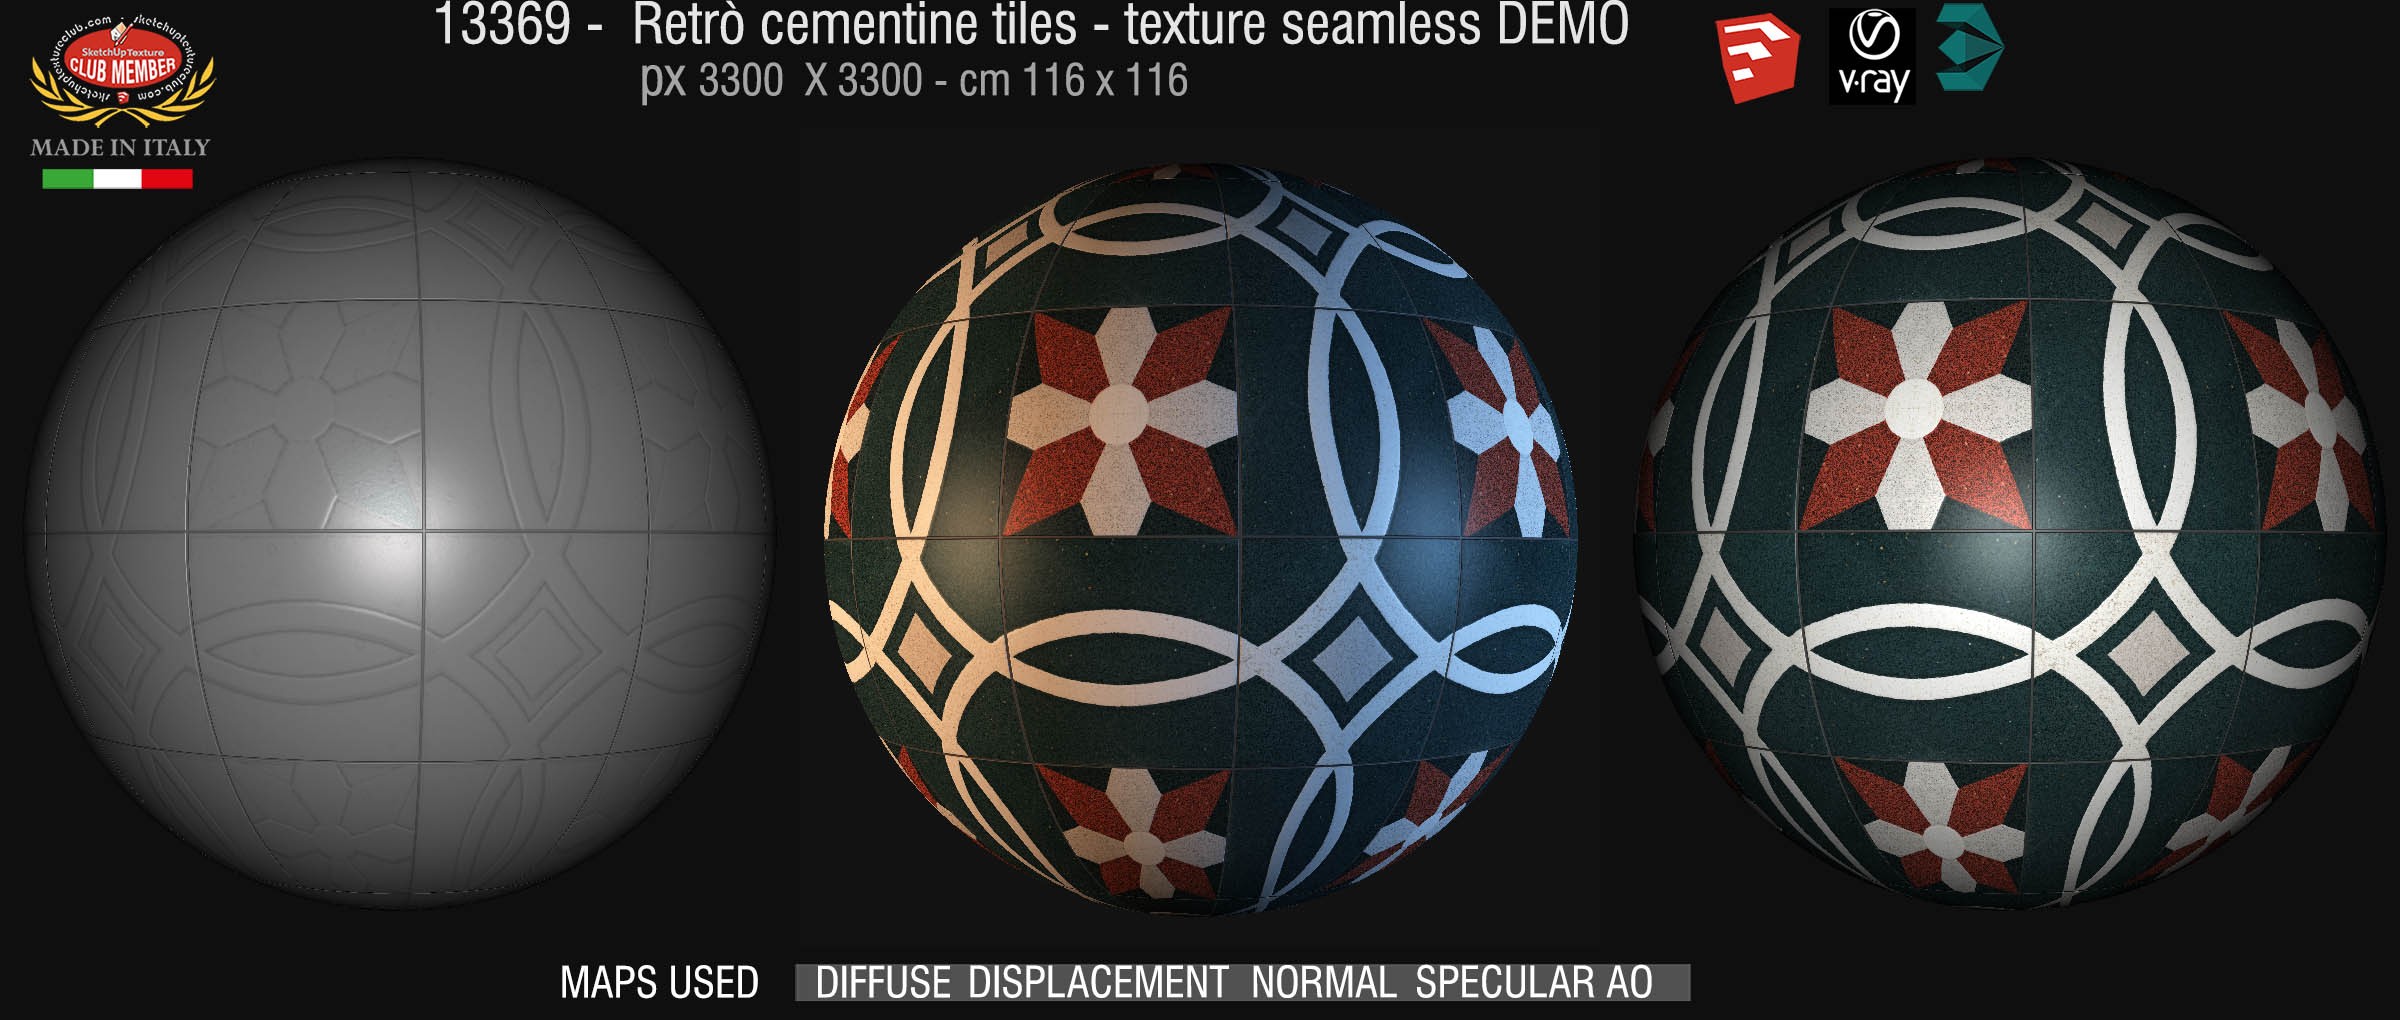 13369 retrò cementine tiles - texture seamless + maps DEMO